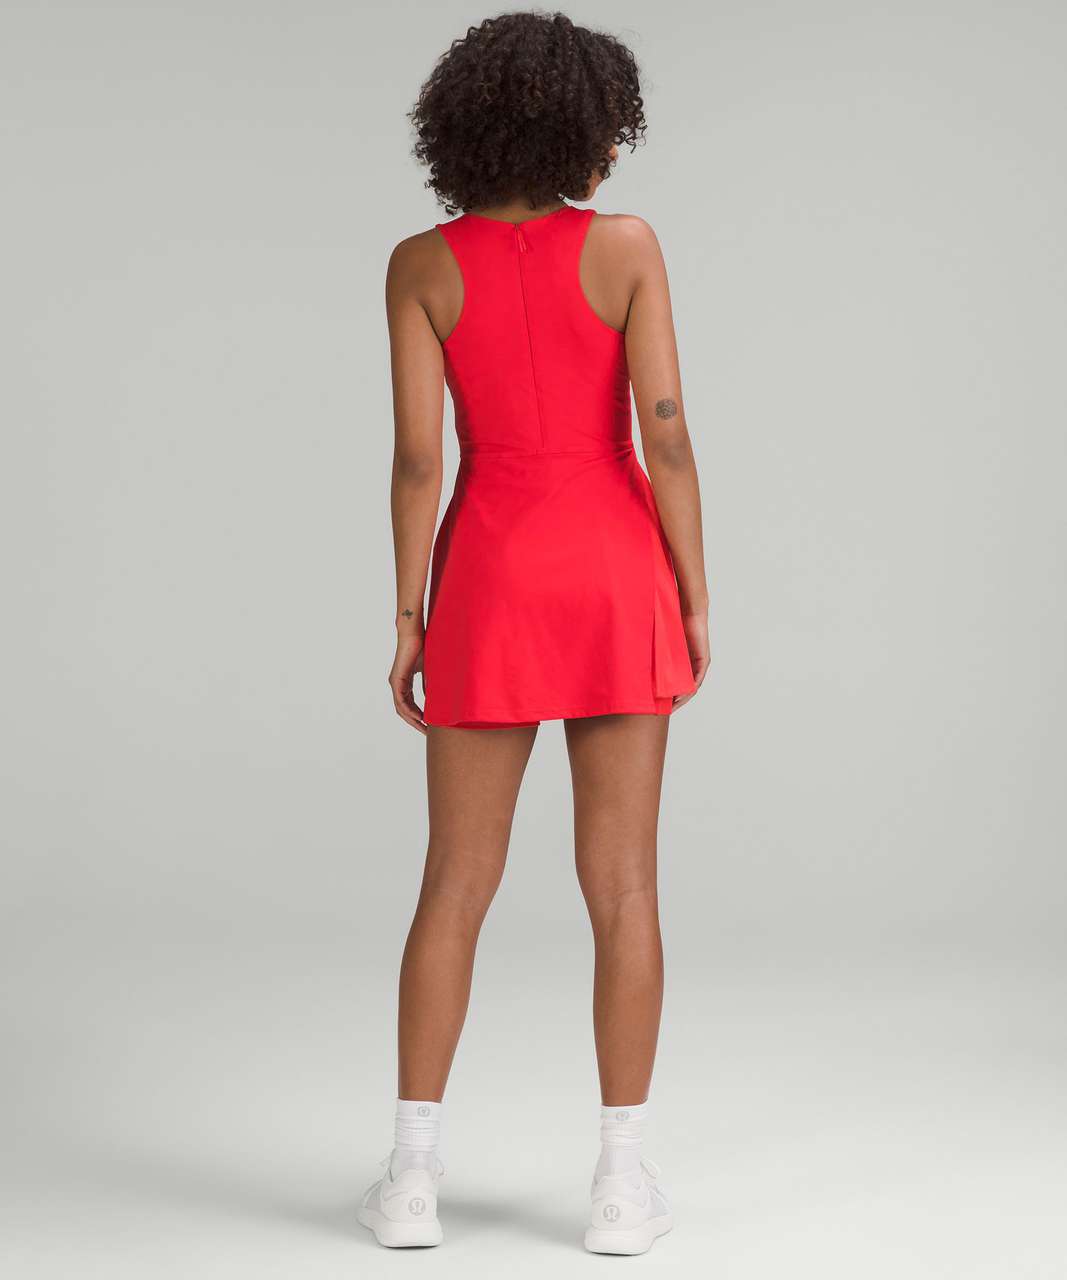 NWT Lululemon Align Dress Flush Pink Size 4 Tennis Dress with shorts